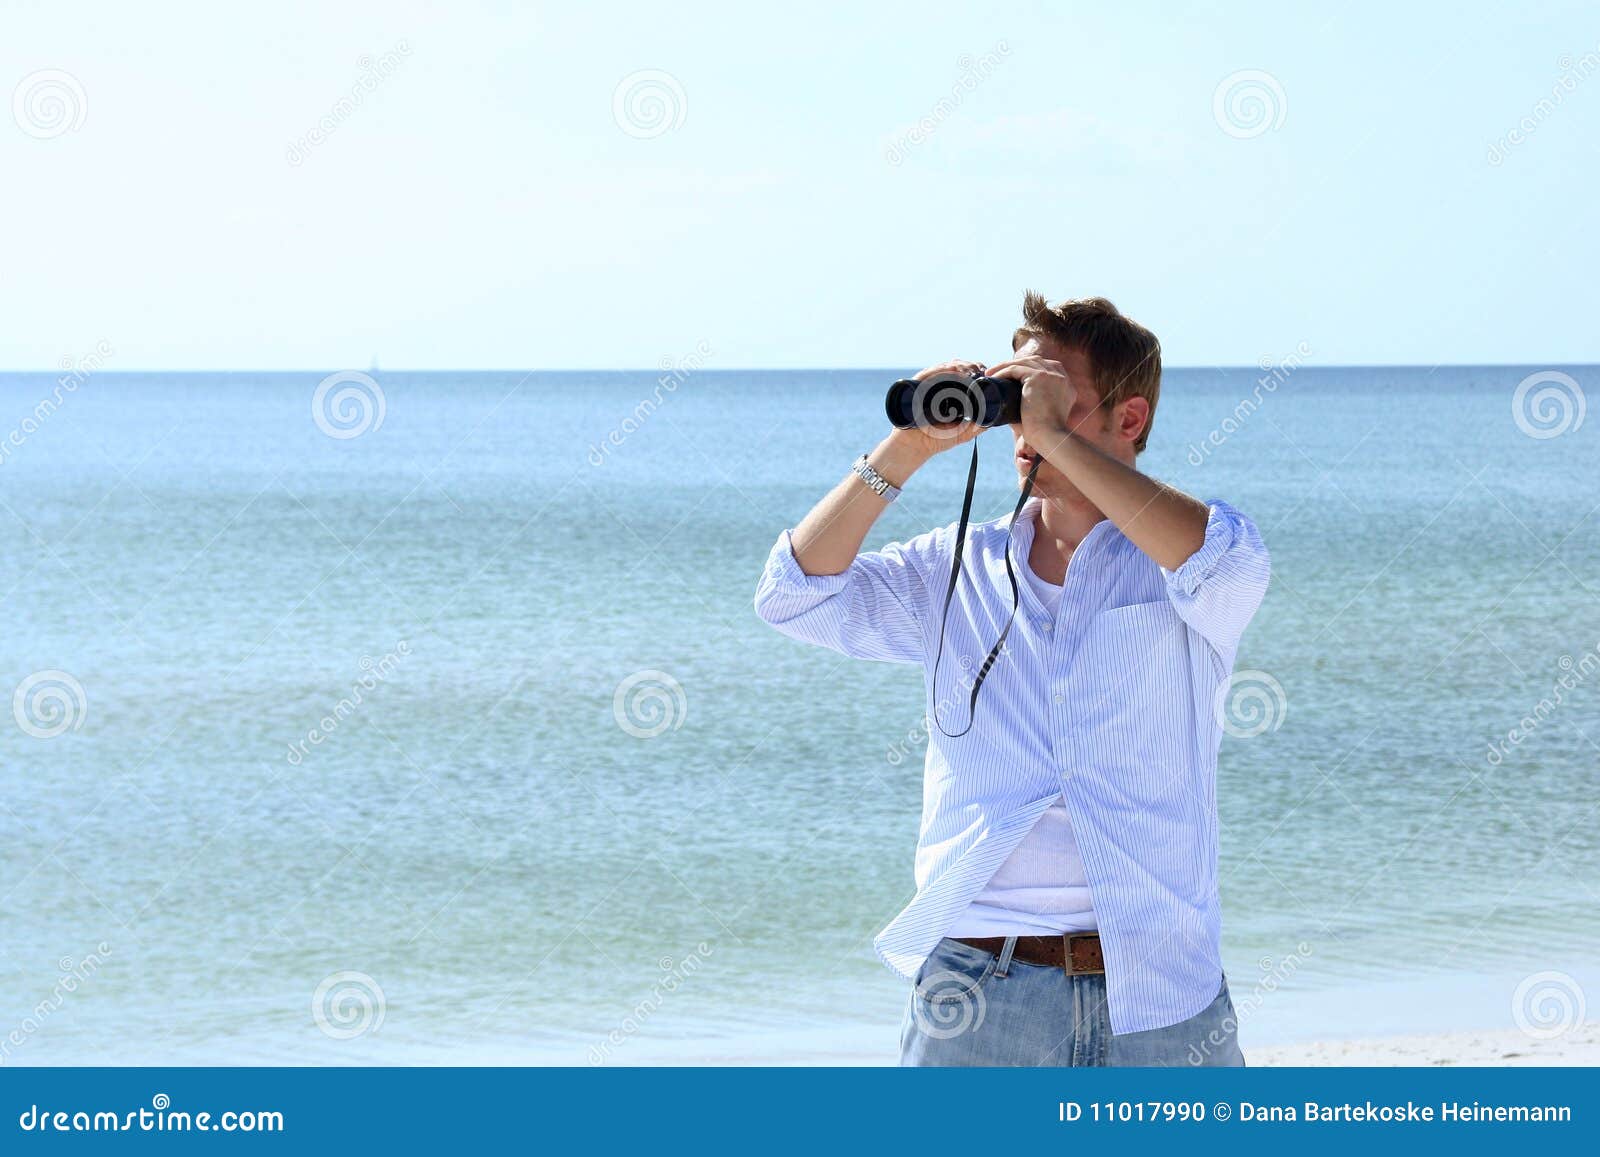 voyeur beach photo gallery